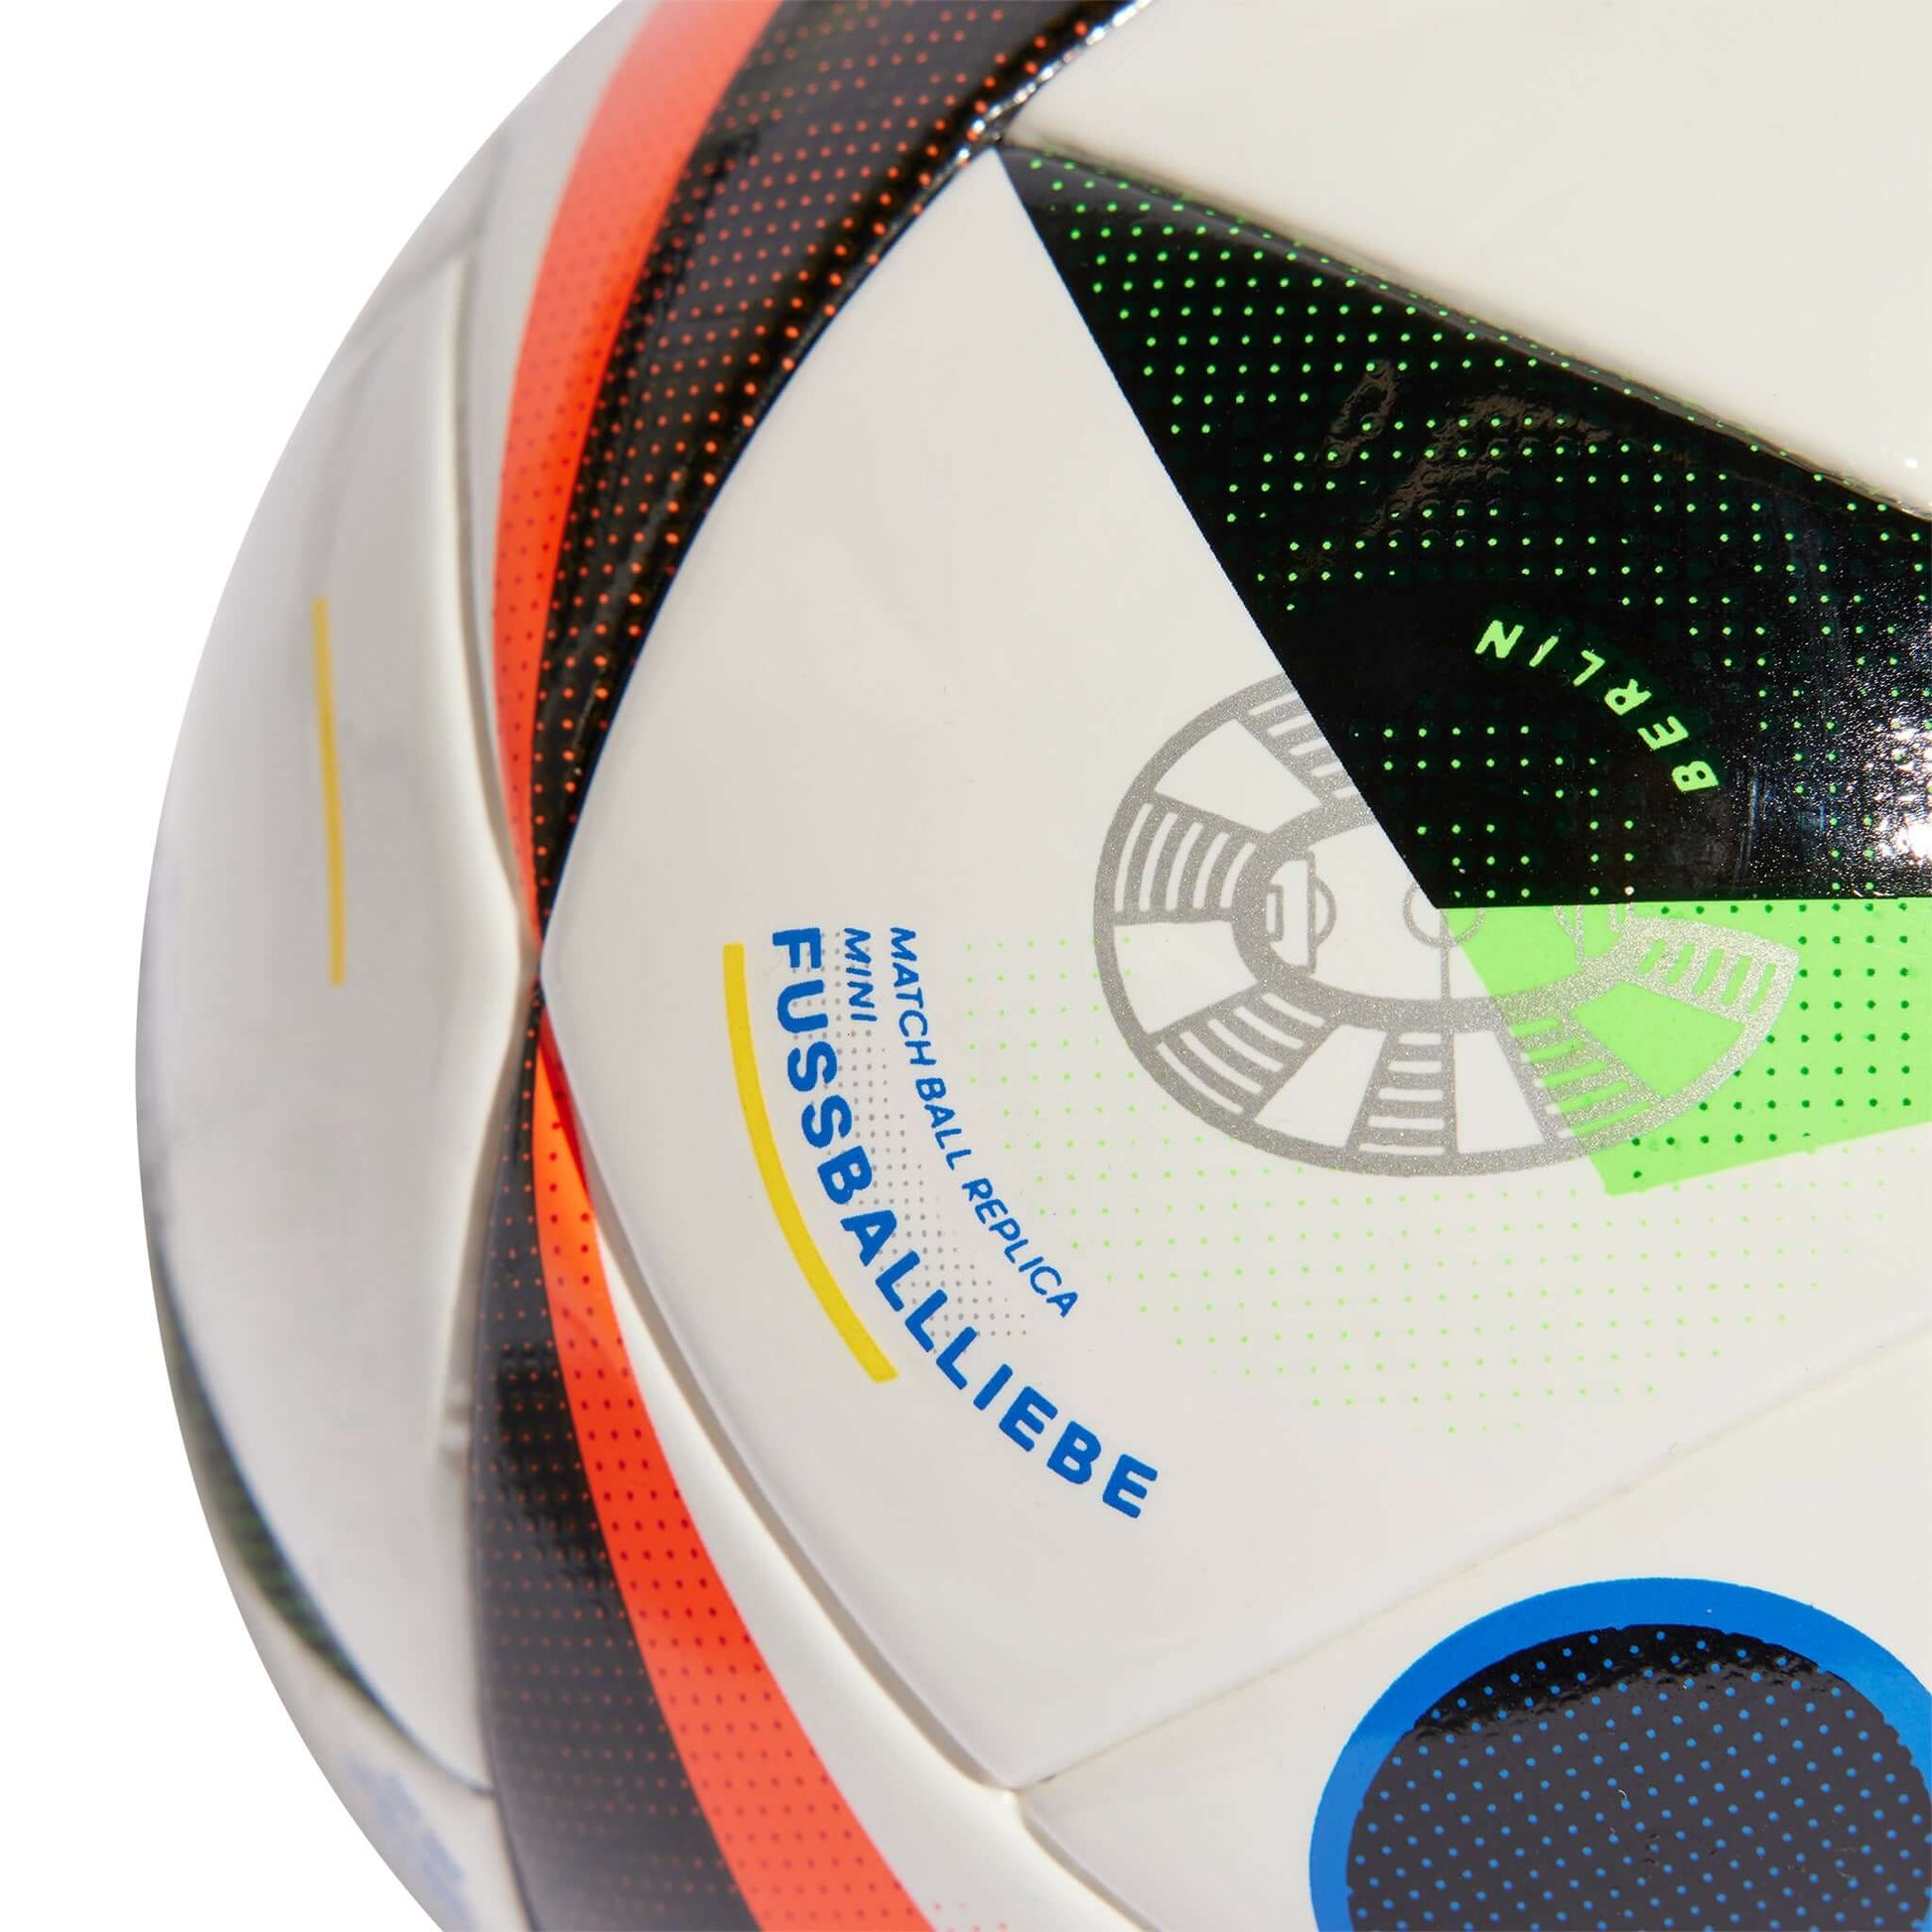 Fussballliebe Mini Ball | EvangelistaSports.com | Canada's Premiere Soccer Store